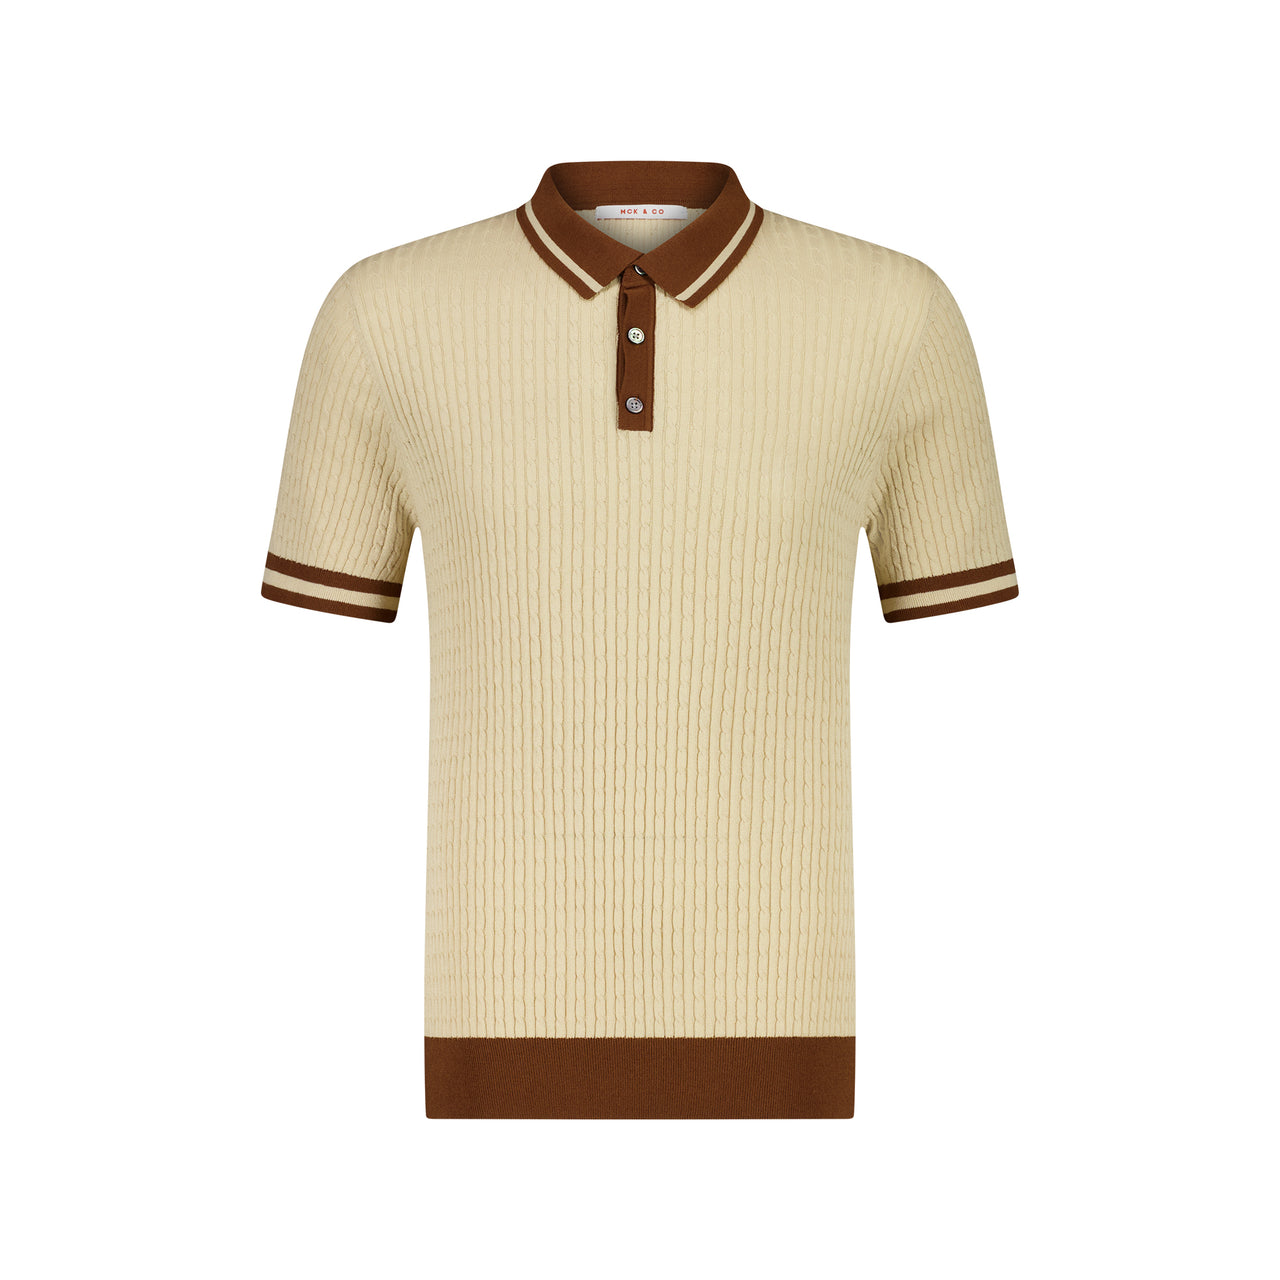 MCKINNON Buttoned Contrast Shirt BEIGE/BROWN